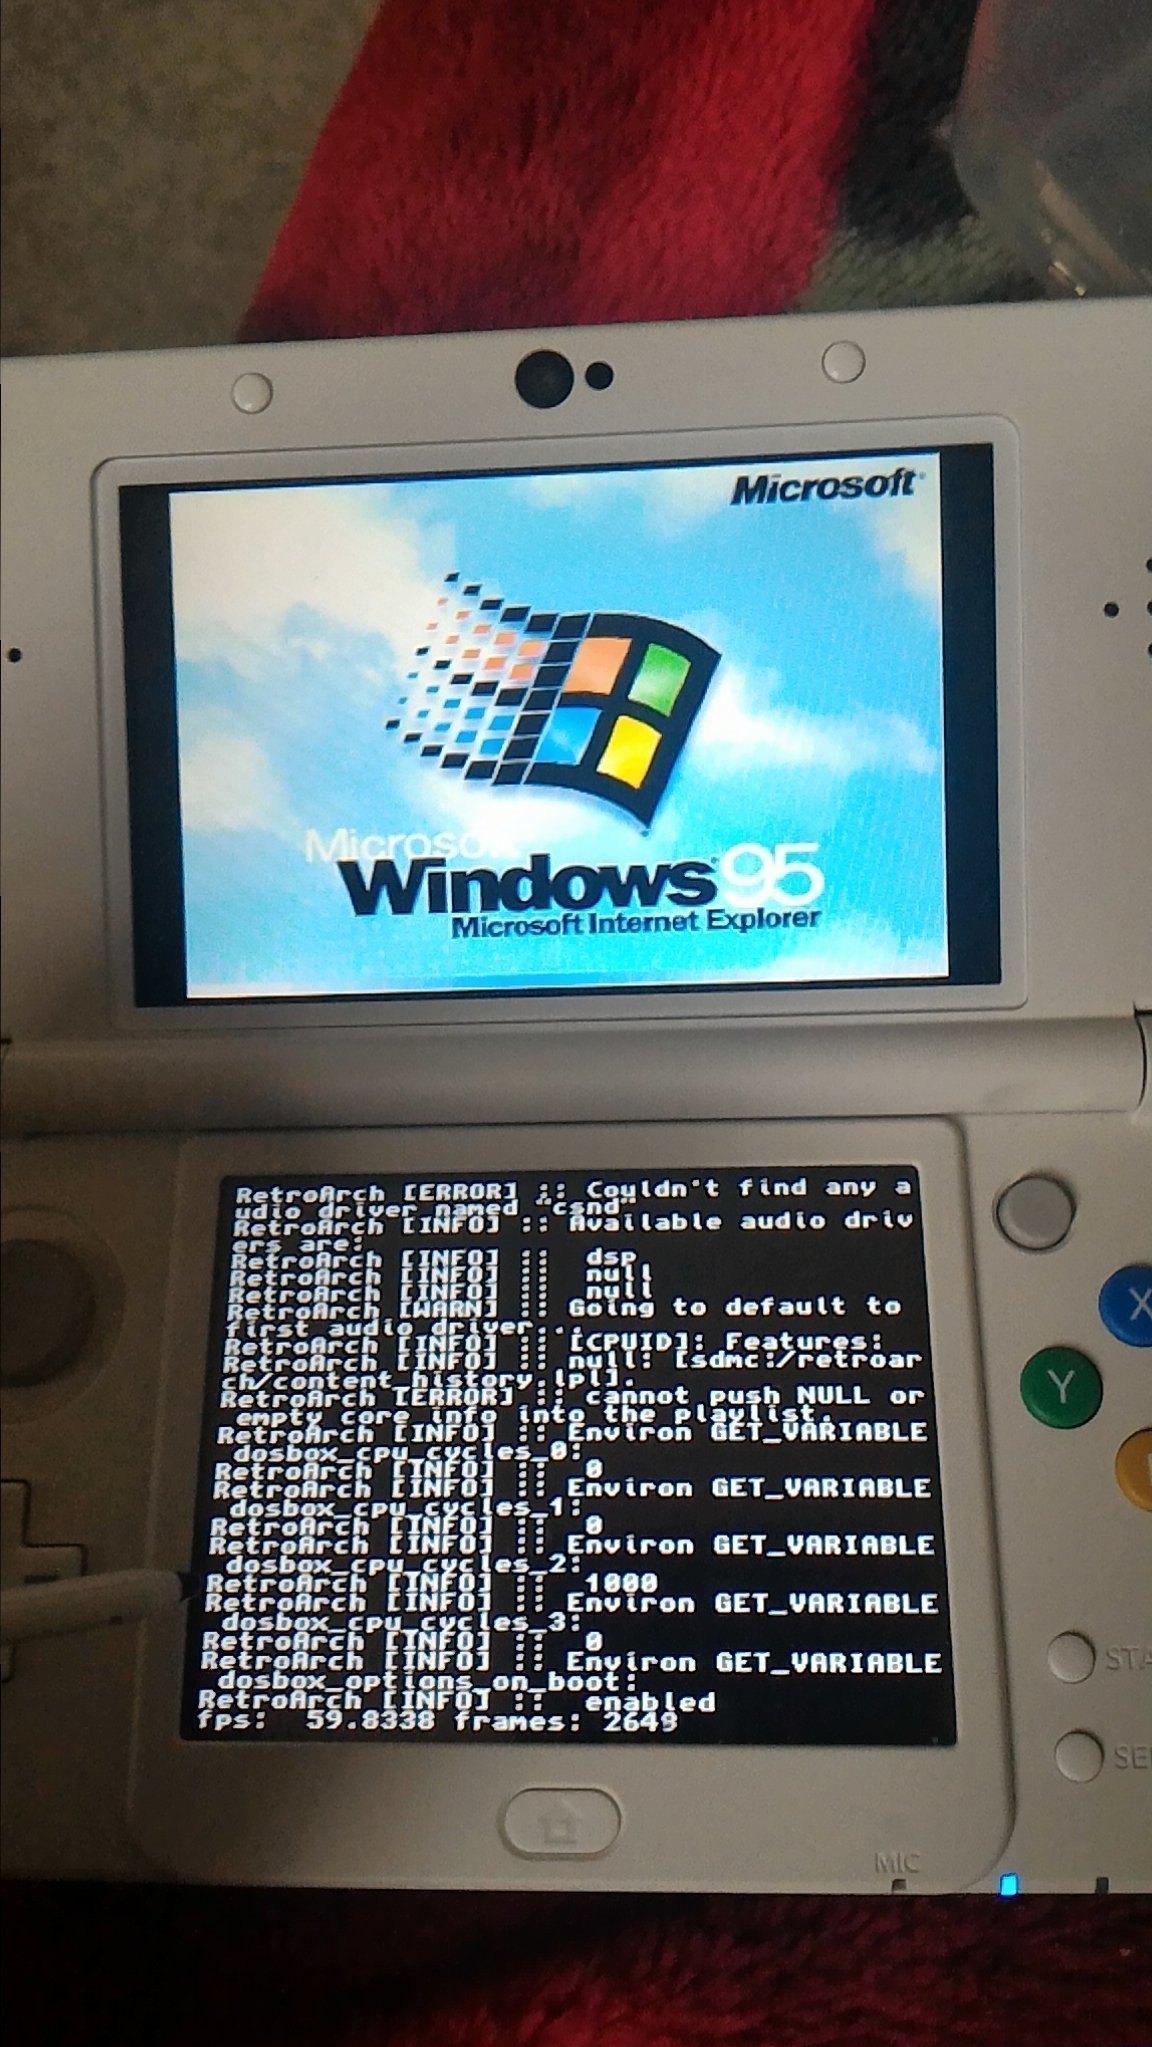 Windows 95 running on a New Nintendo 3DS | NeoGAF